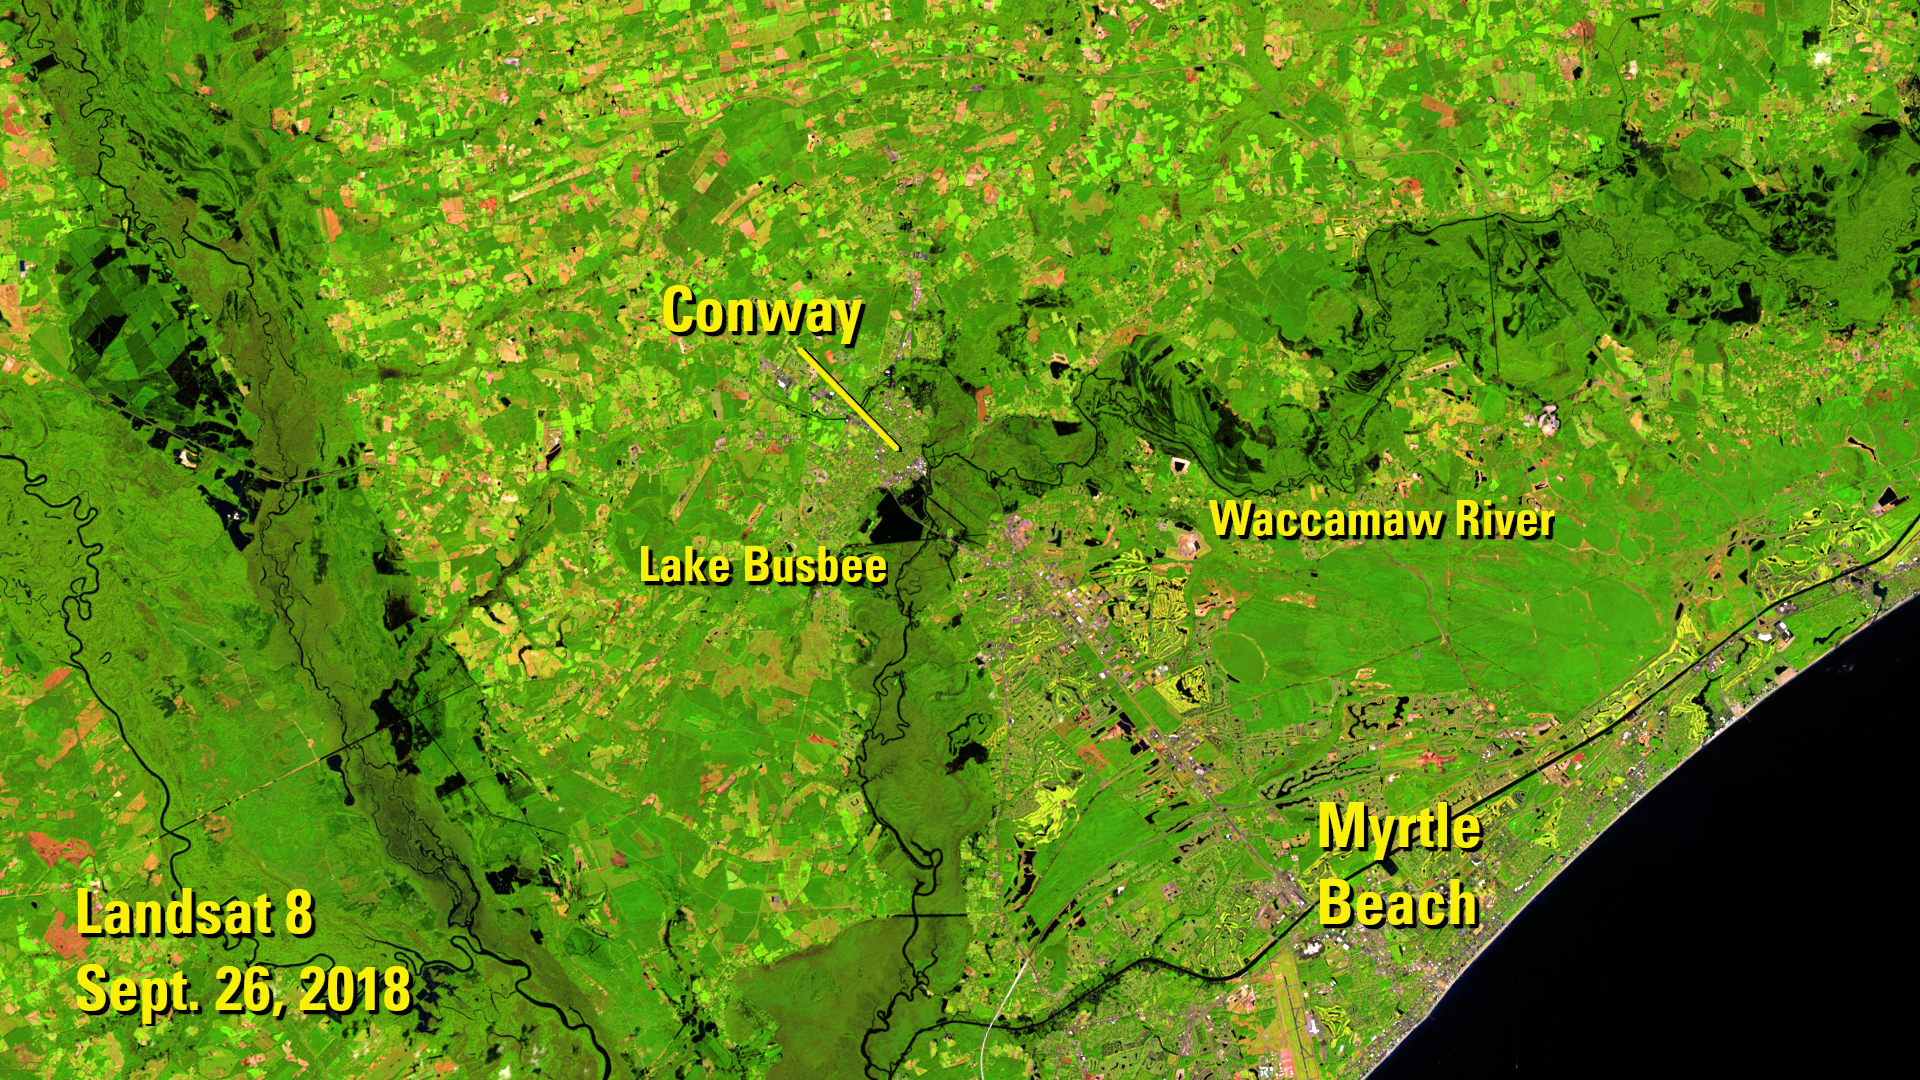 Landsat 8 image of Conway, S.C. after Hurricane Florence